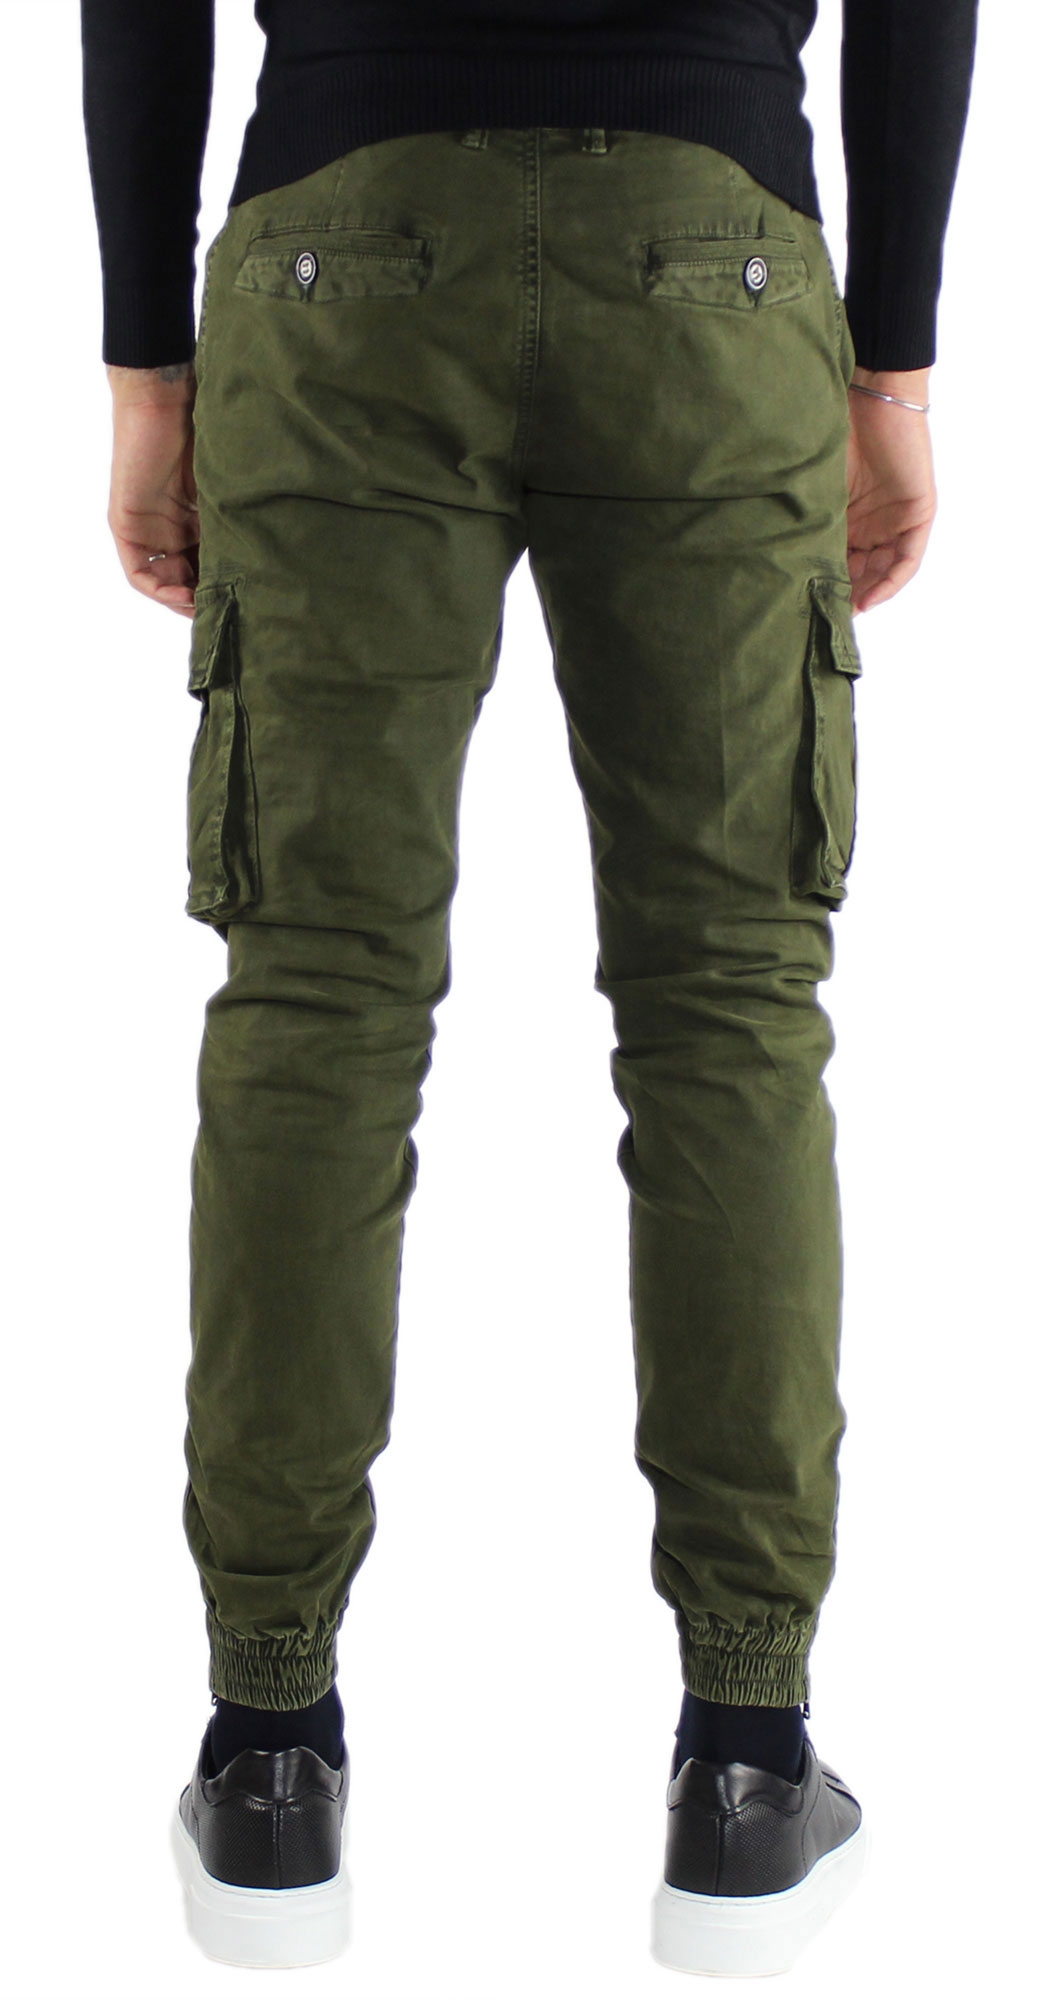 Winter Mens Cargo Pants Side Pockets Cotton Casual Cargo Slim Fit | eBay